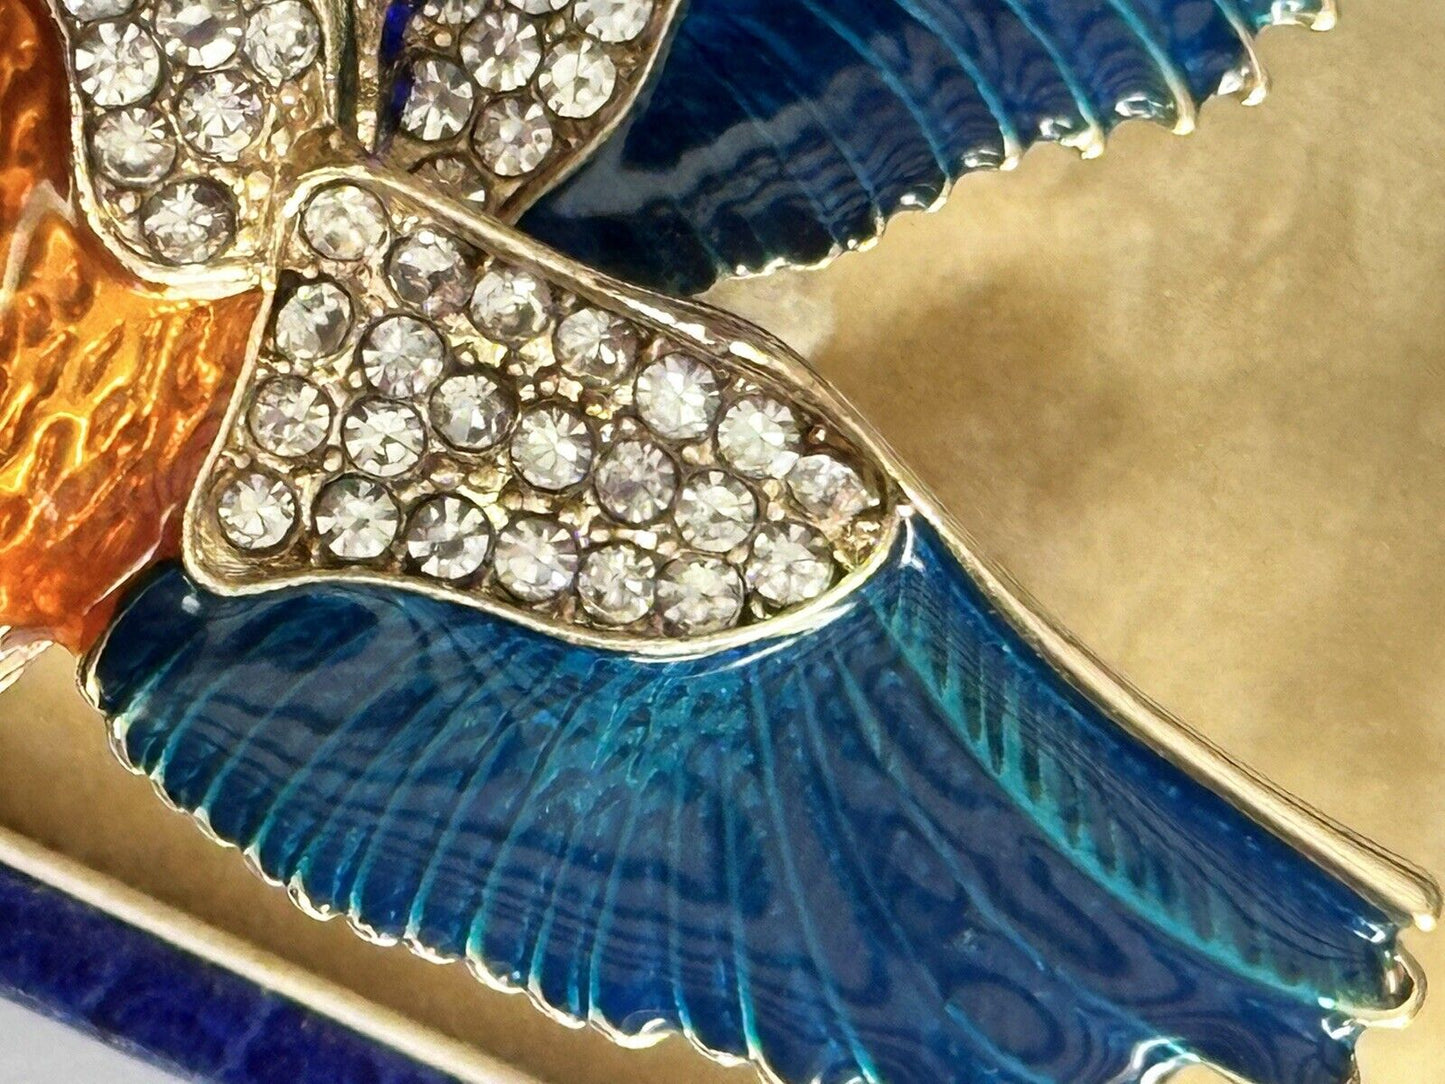 Vintage Gold Plated Blue Enamel Diamanté Hummingbird Brooch